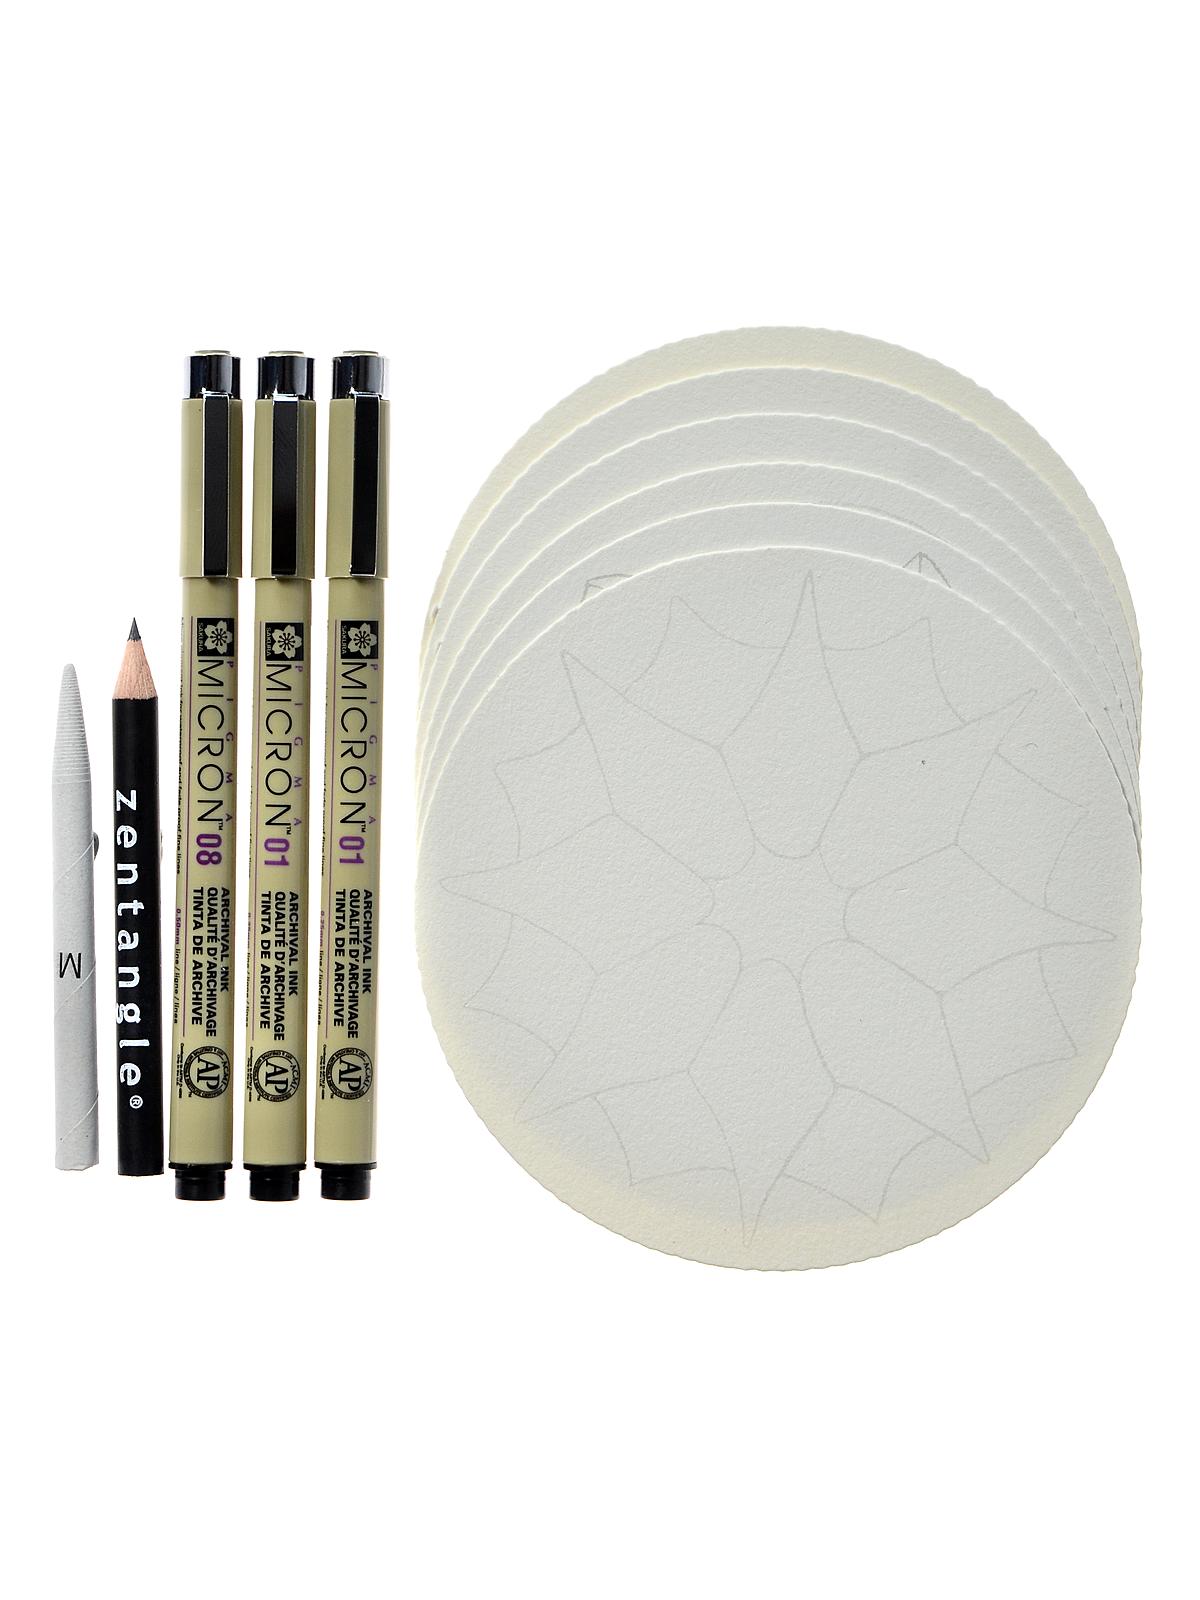 Zentangle Drawing Sets Set Of 11 White Zendala Round Tile